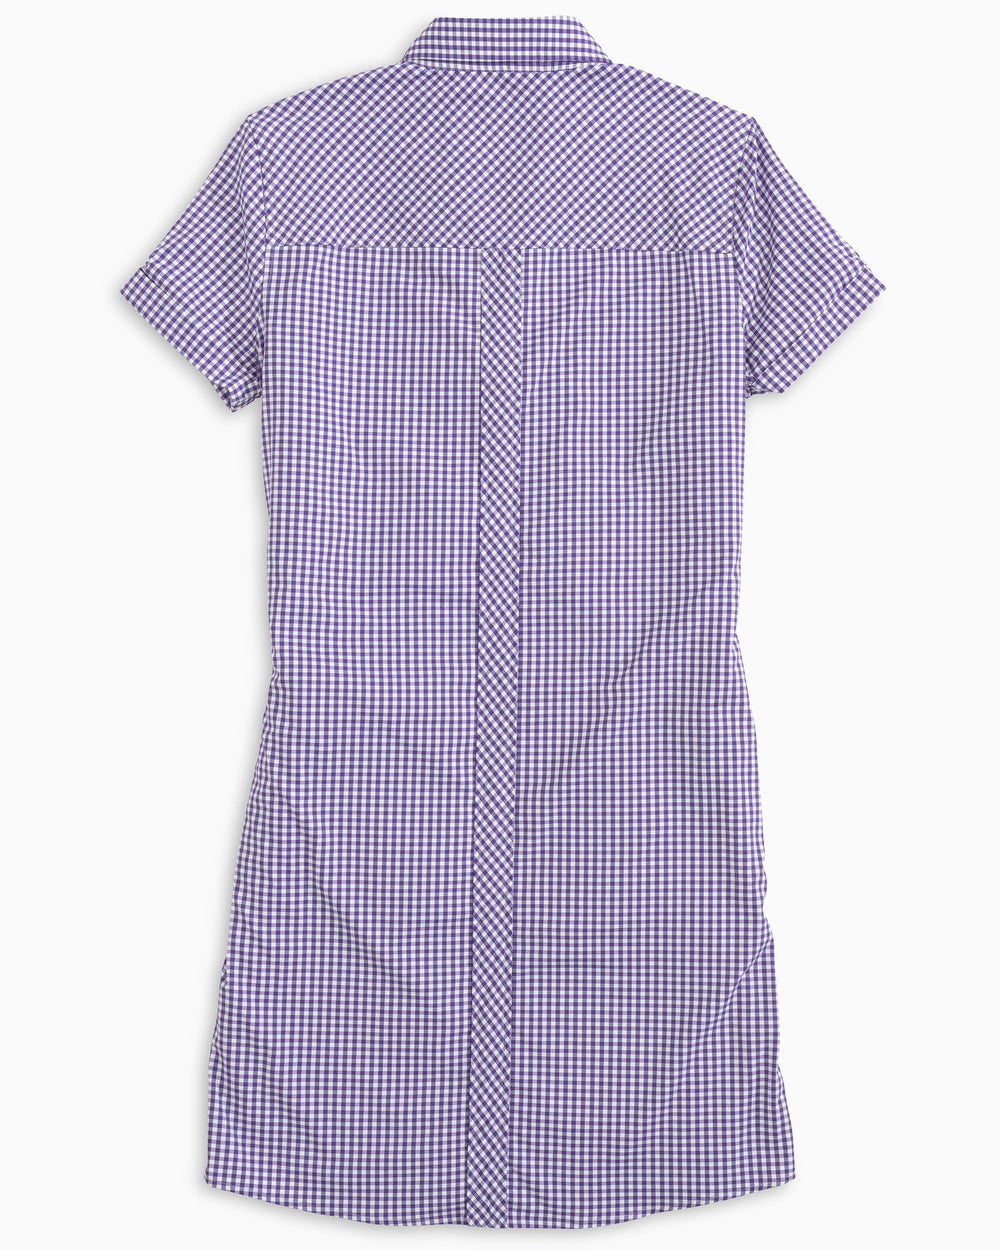 The back of the Women's Gameday Kamryn Intercoastal Shirt Dress by Southern Tide - Regal Purple